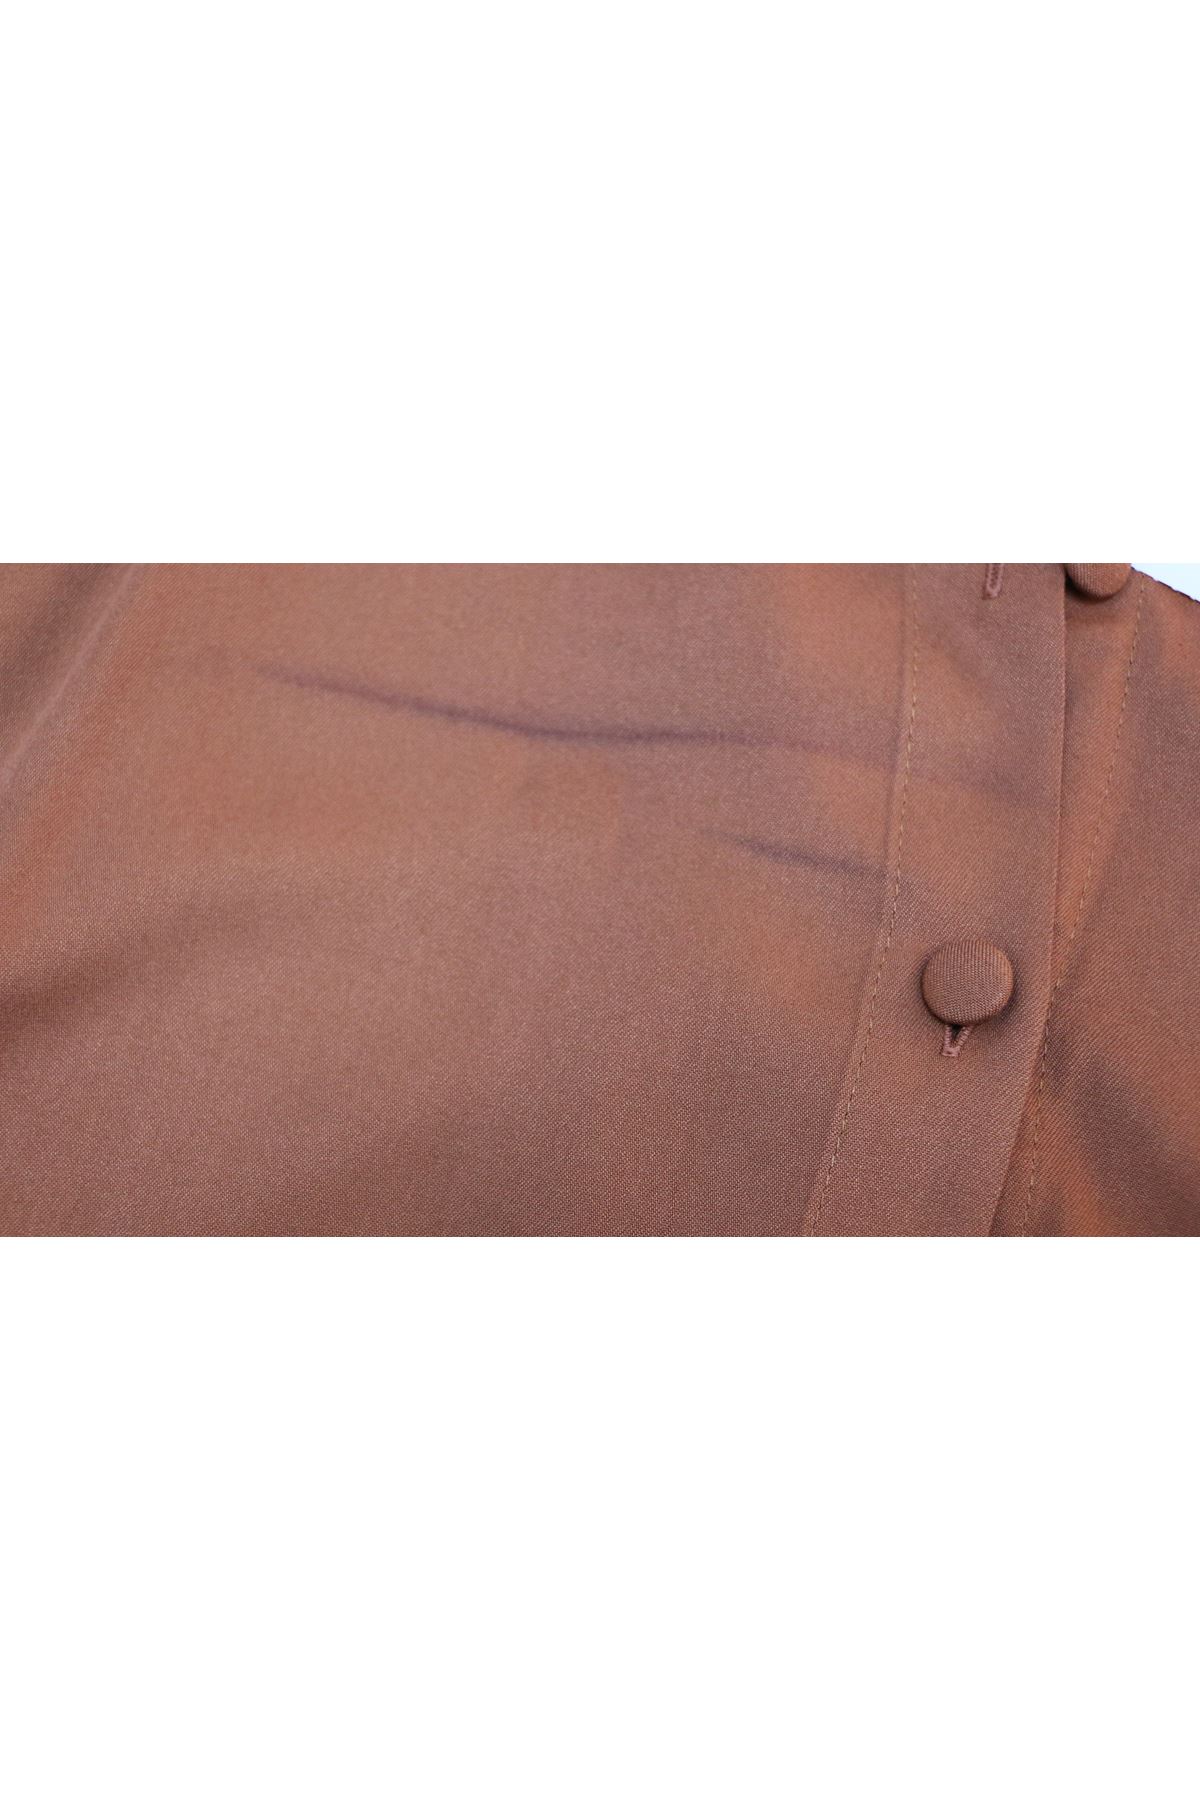 38017 Large Size Low Sleeve Belmando Shirt-Tile